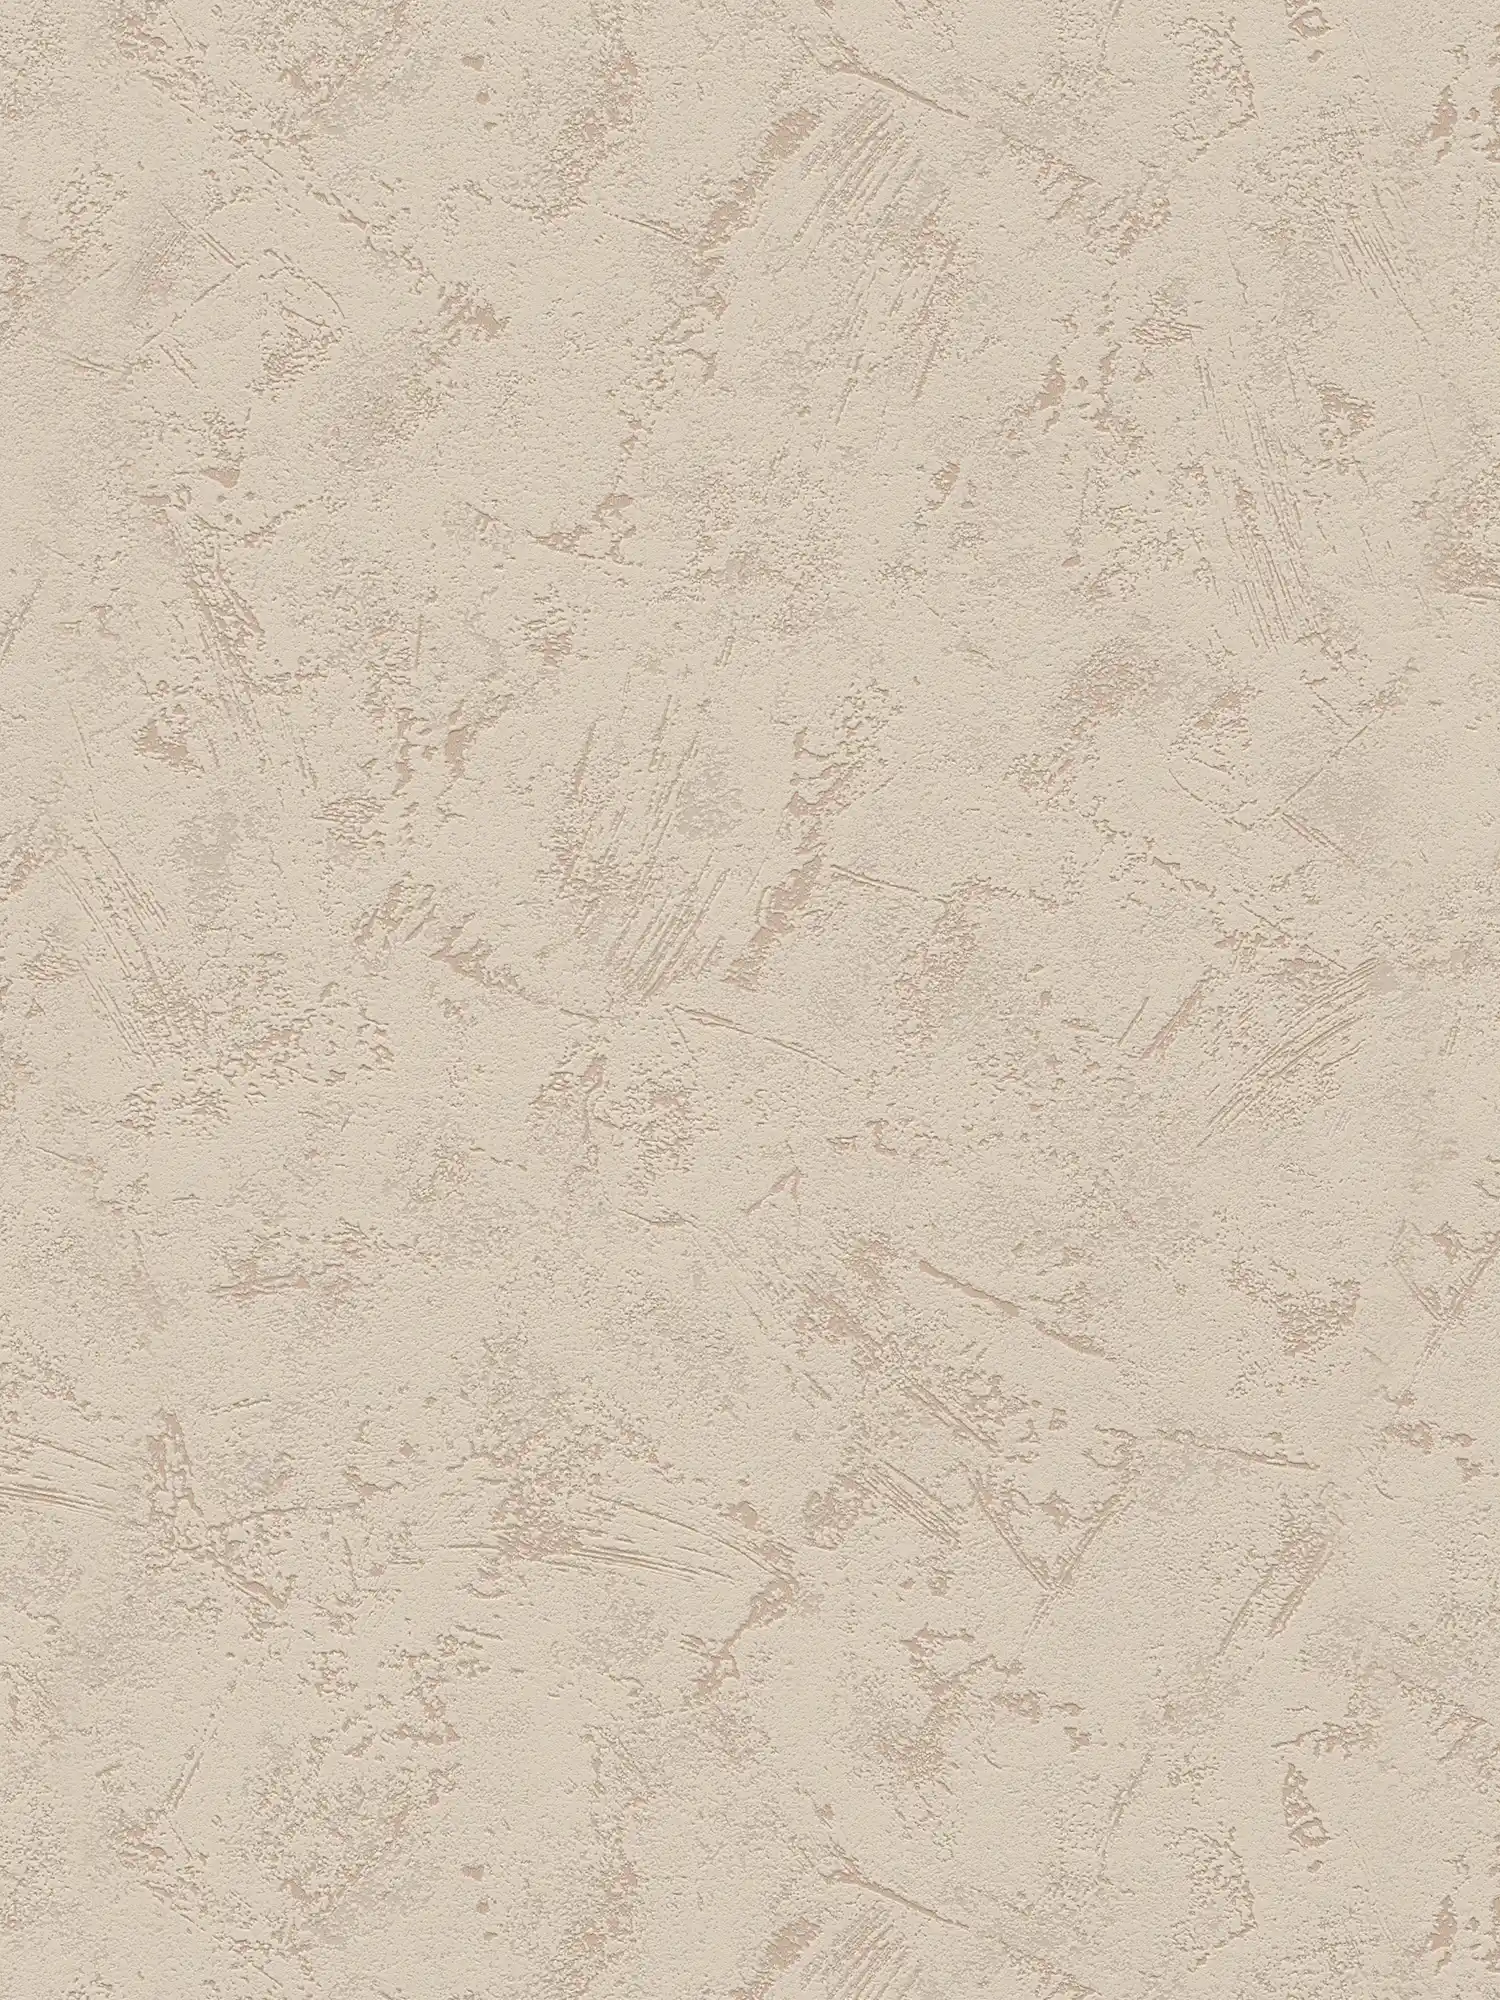 Trowel plaster wallpaper with foam structure & pattern - Brown
